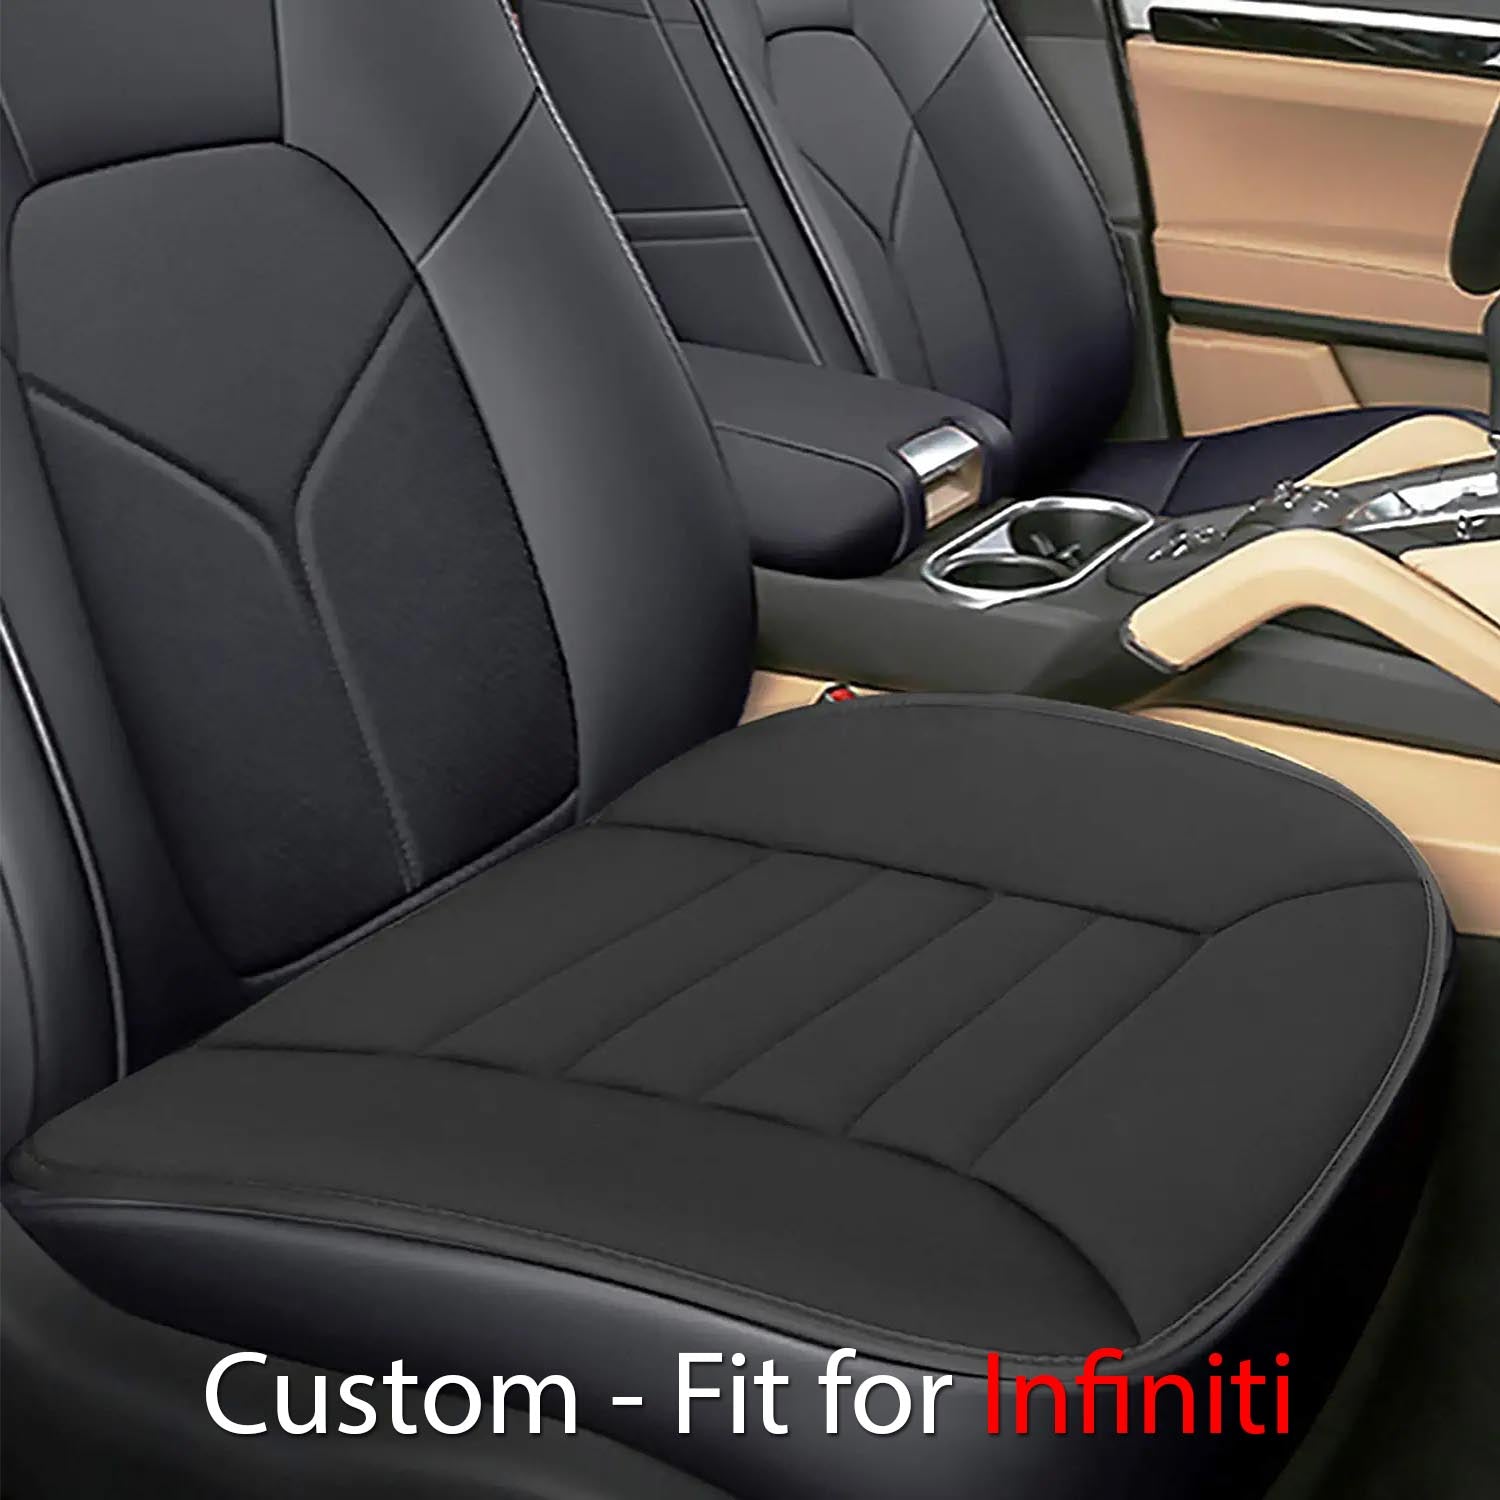 Car Seat Cushion with 1.2inch Comfort Memory Foam, Custom-Fit For Car, Seat Cushion for Car and Office Chair DLIN247